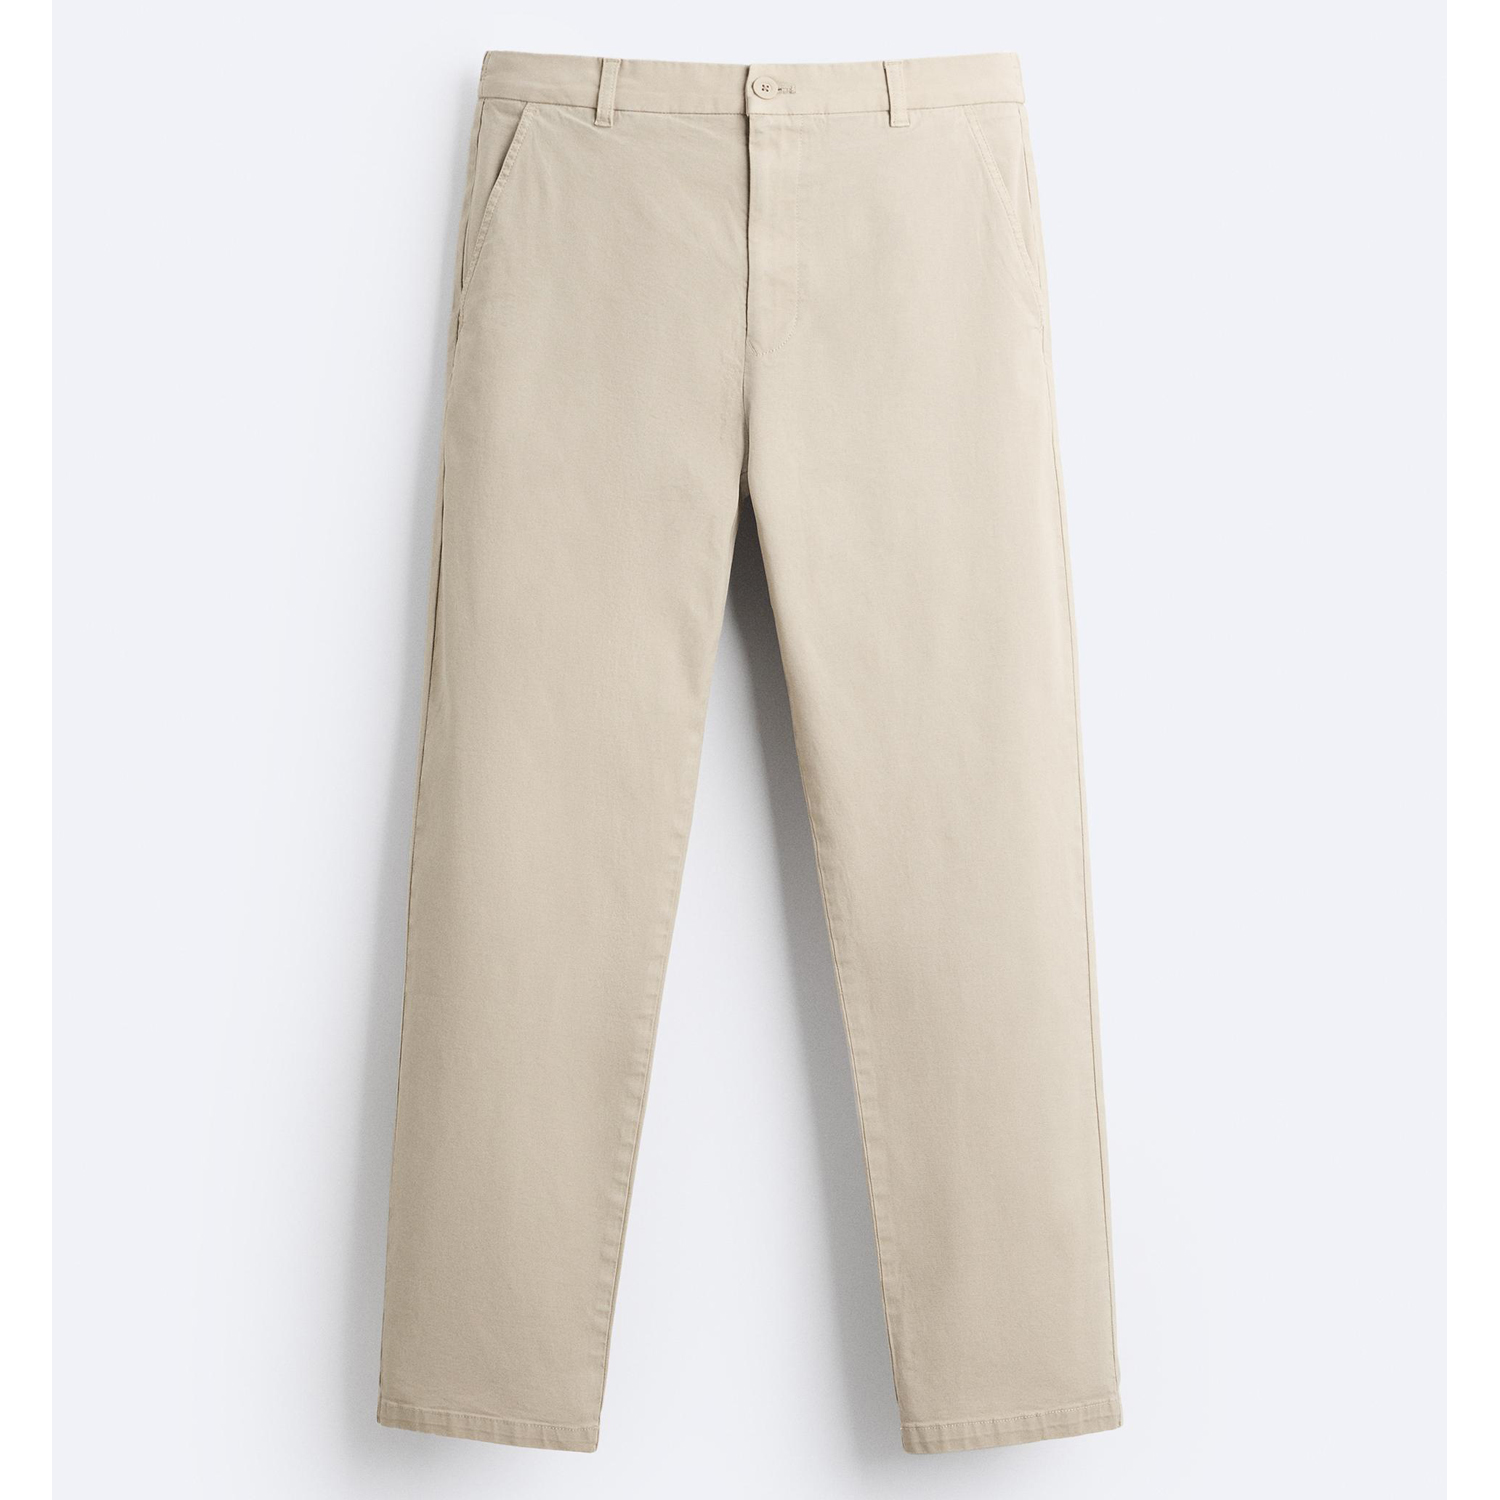 Брюки Zara Chinos With Elasticated Waistband, бежевый школьные брюки чинос oshkosh повседневный стиль карманы размер 6 синий